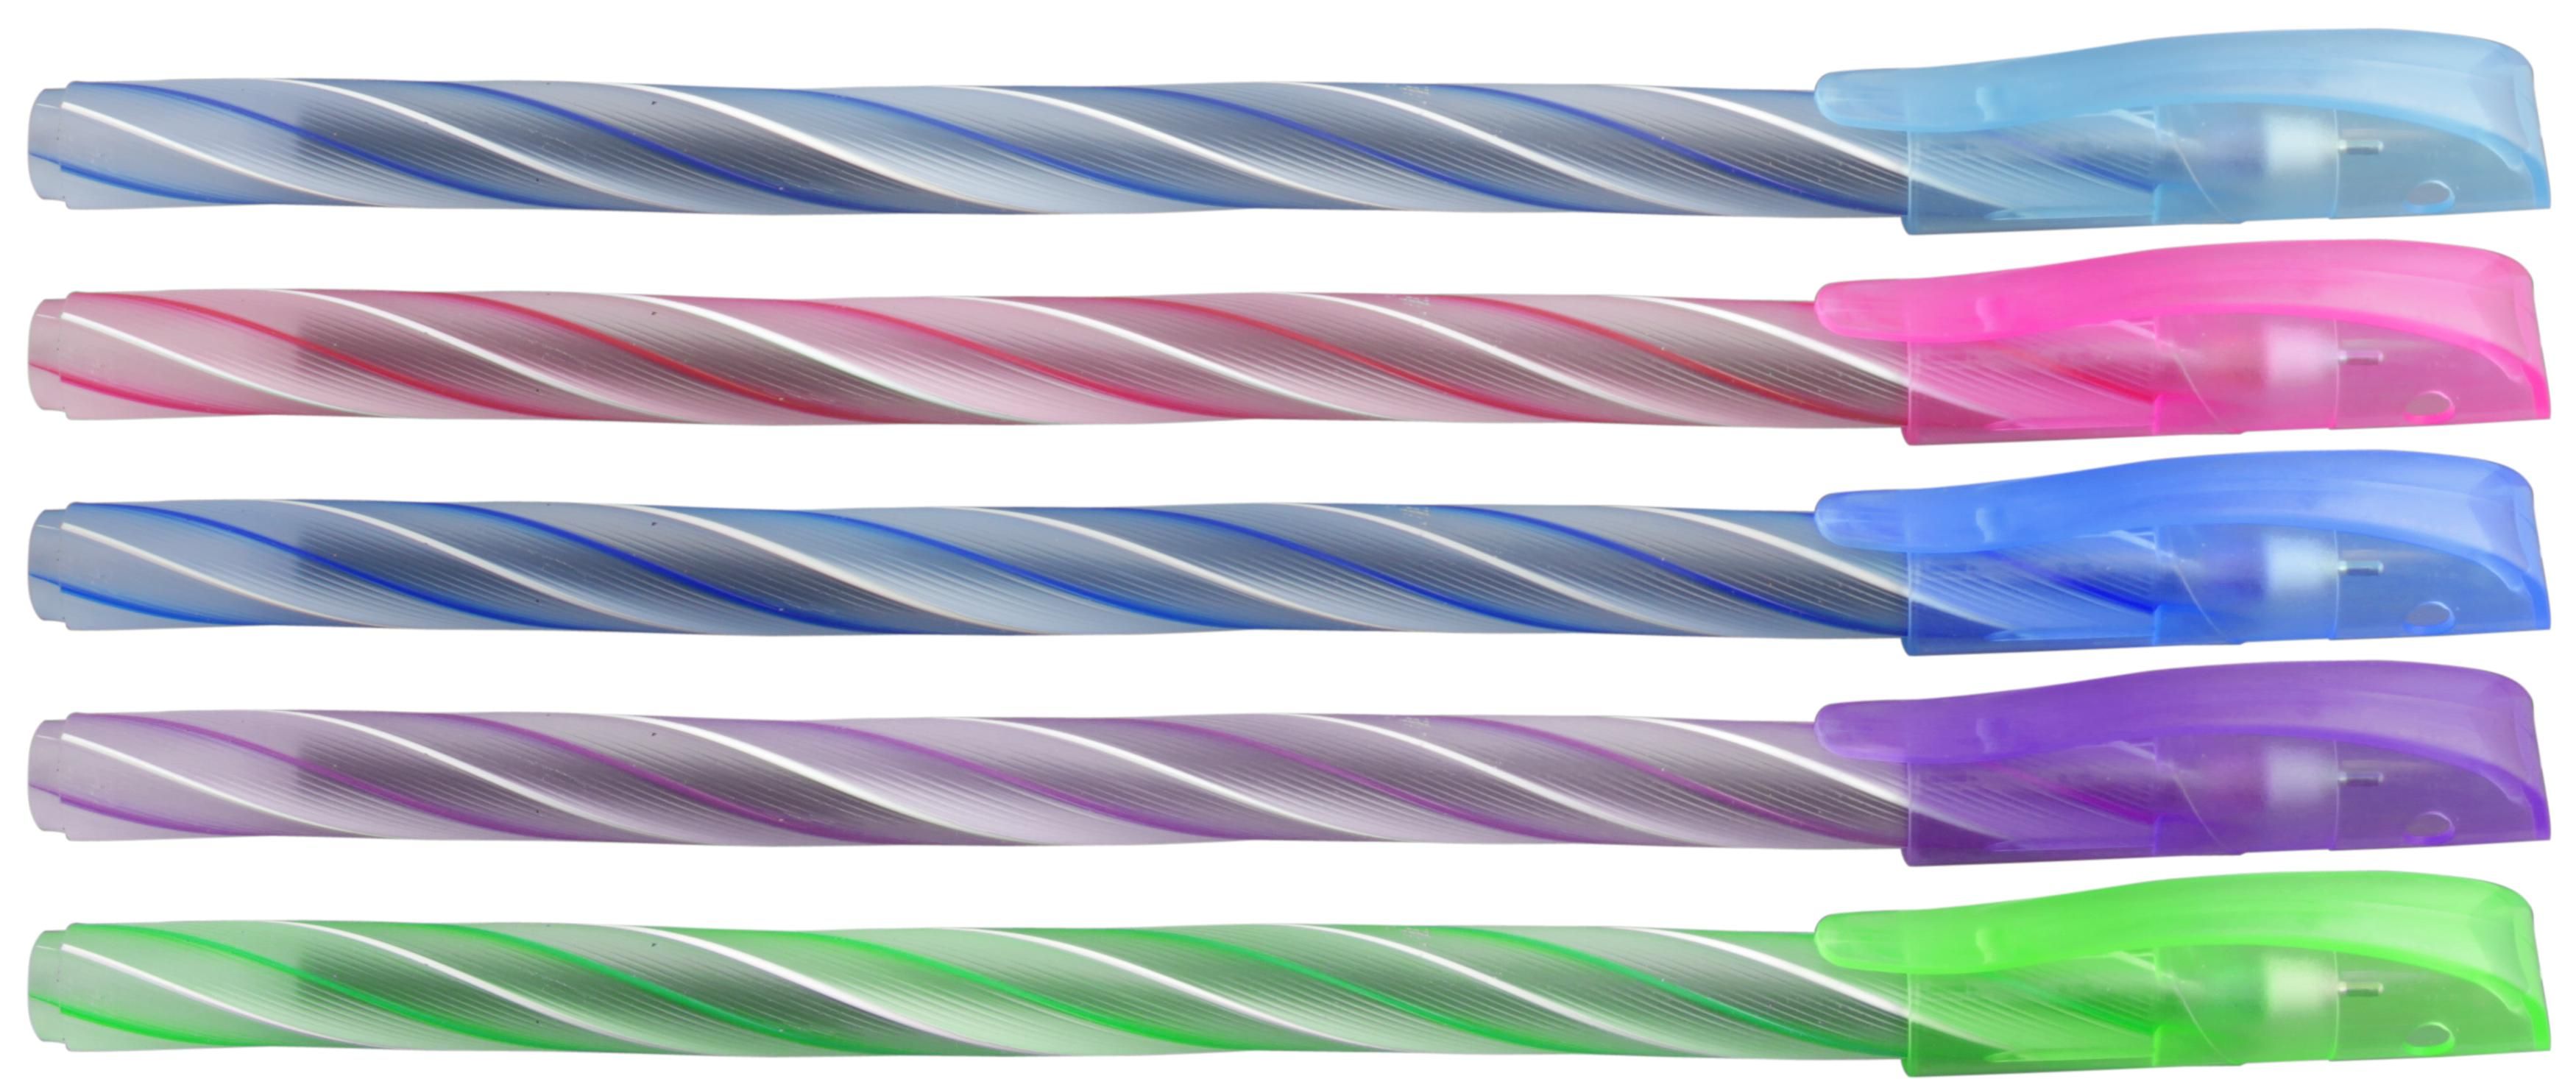 Ball pen LINC CANDY/blue, box 50pcs, 5 vivid colours